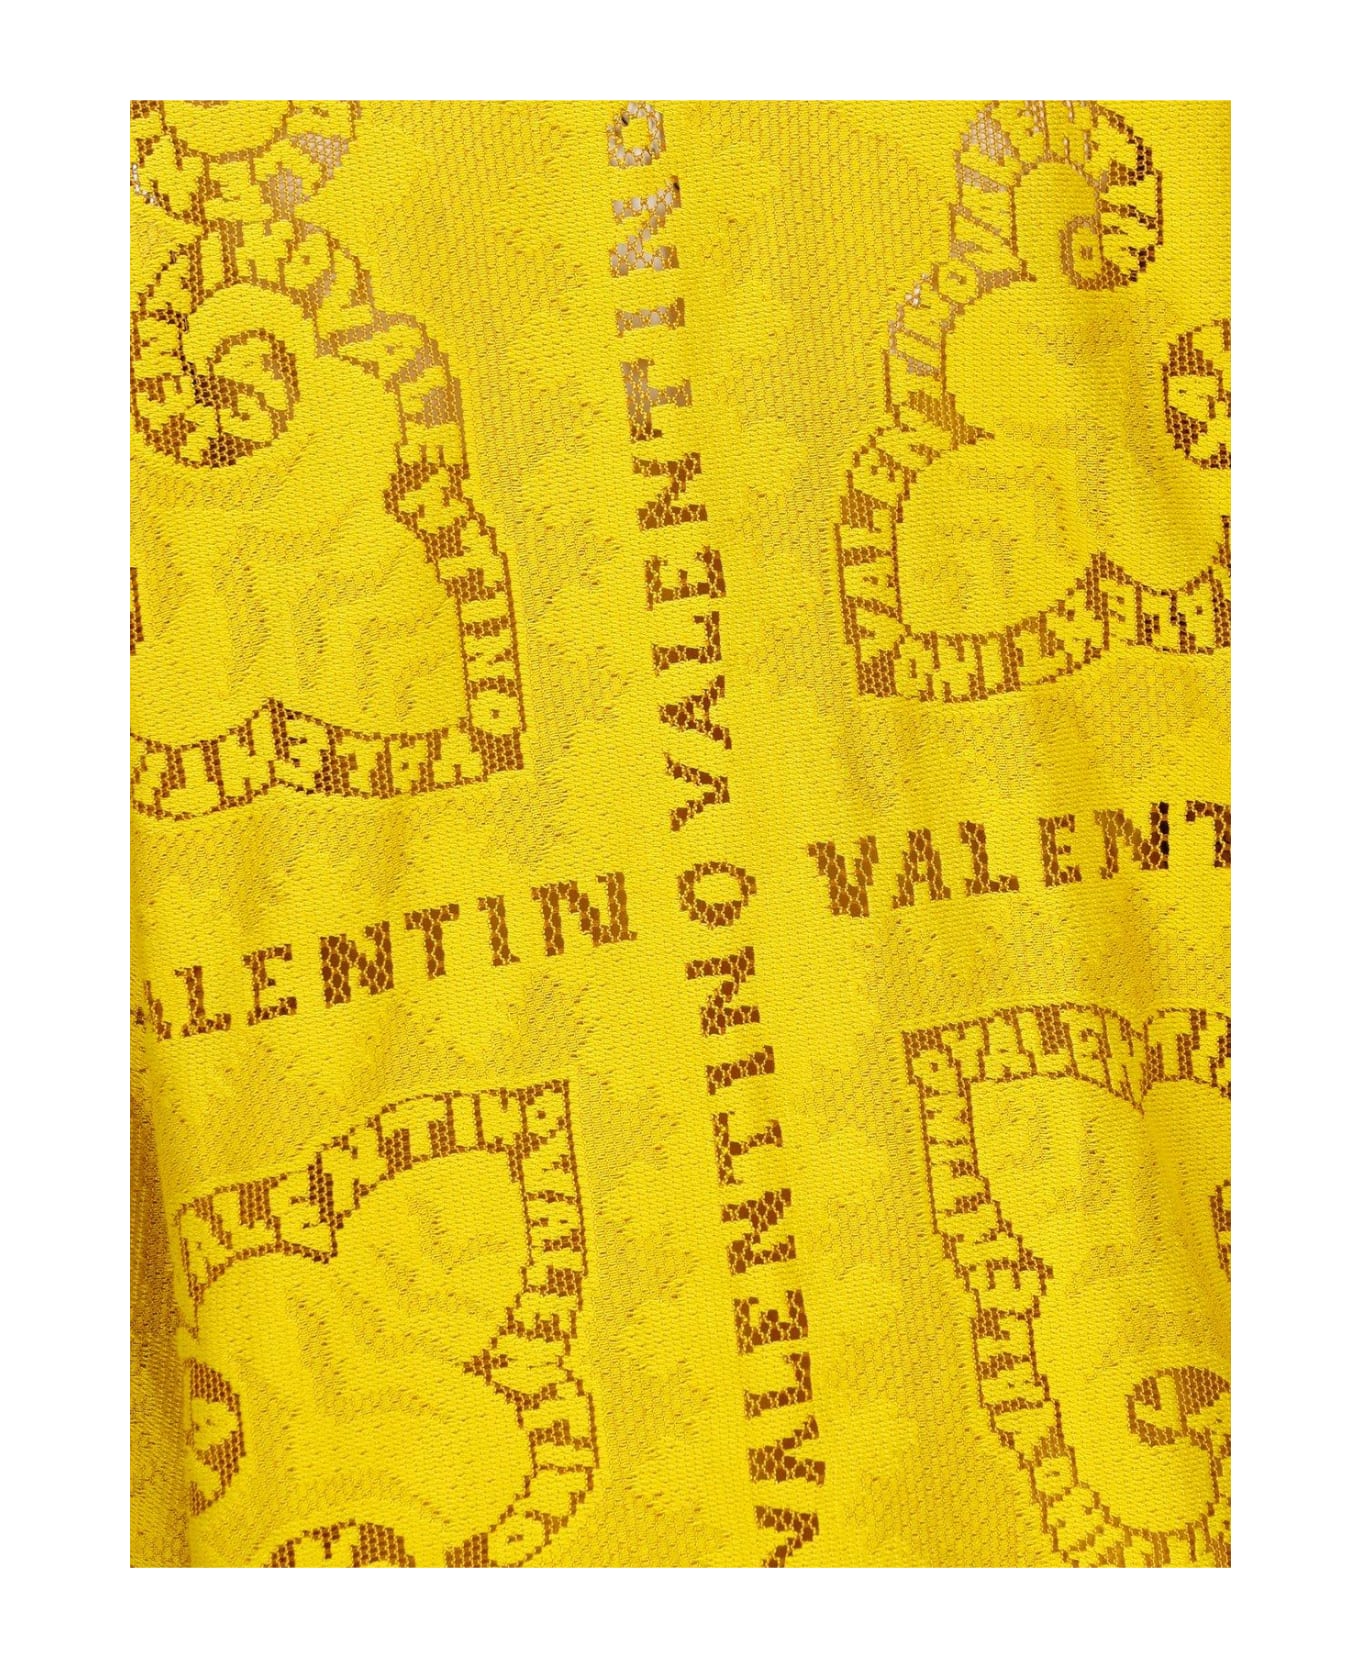 Valentino Garavani Valentino Logo Plaque V-neck Long-sleeved Dress - Yellow